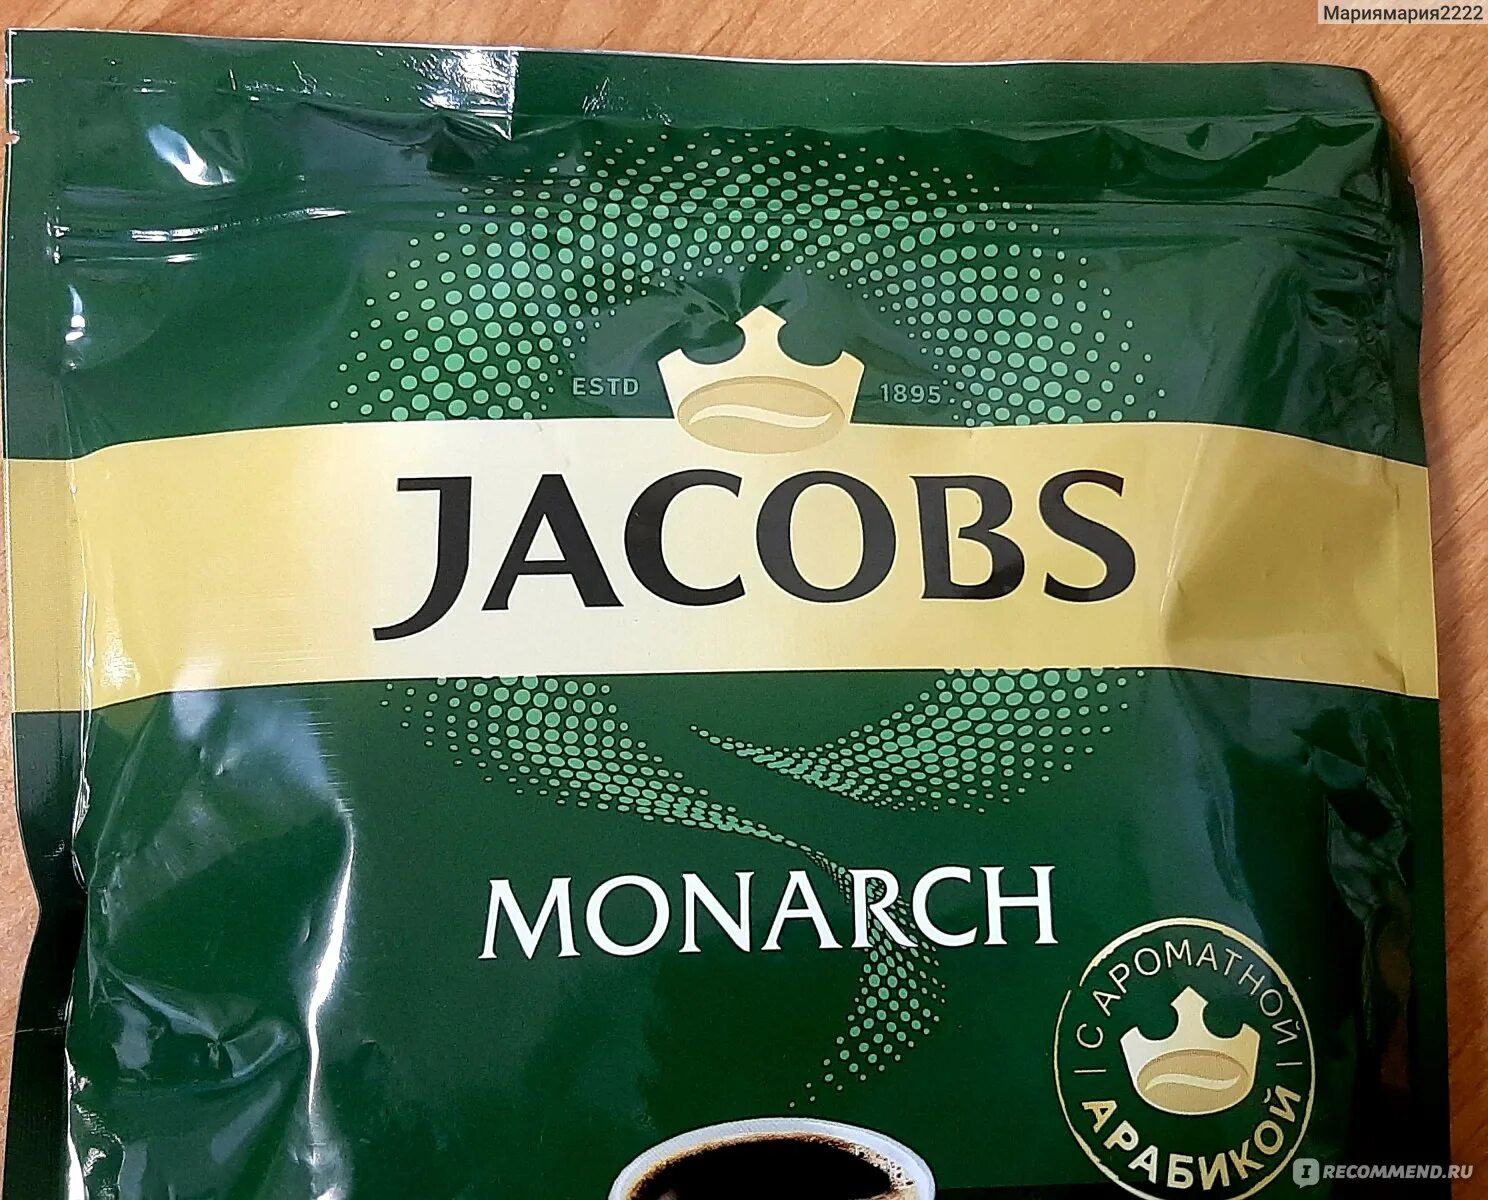 Кофе монарх раньше